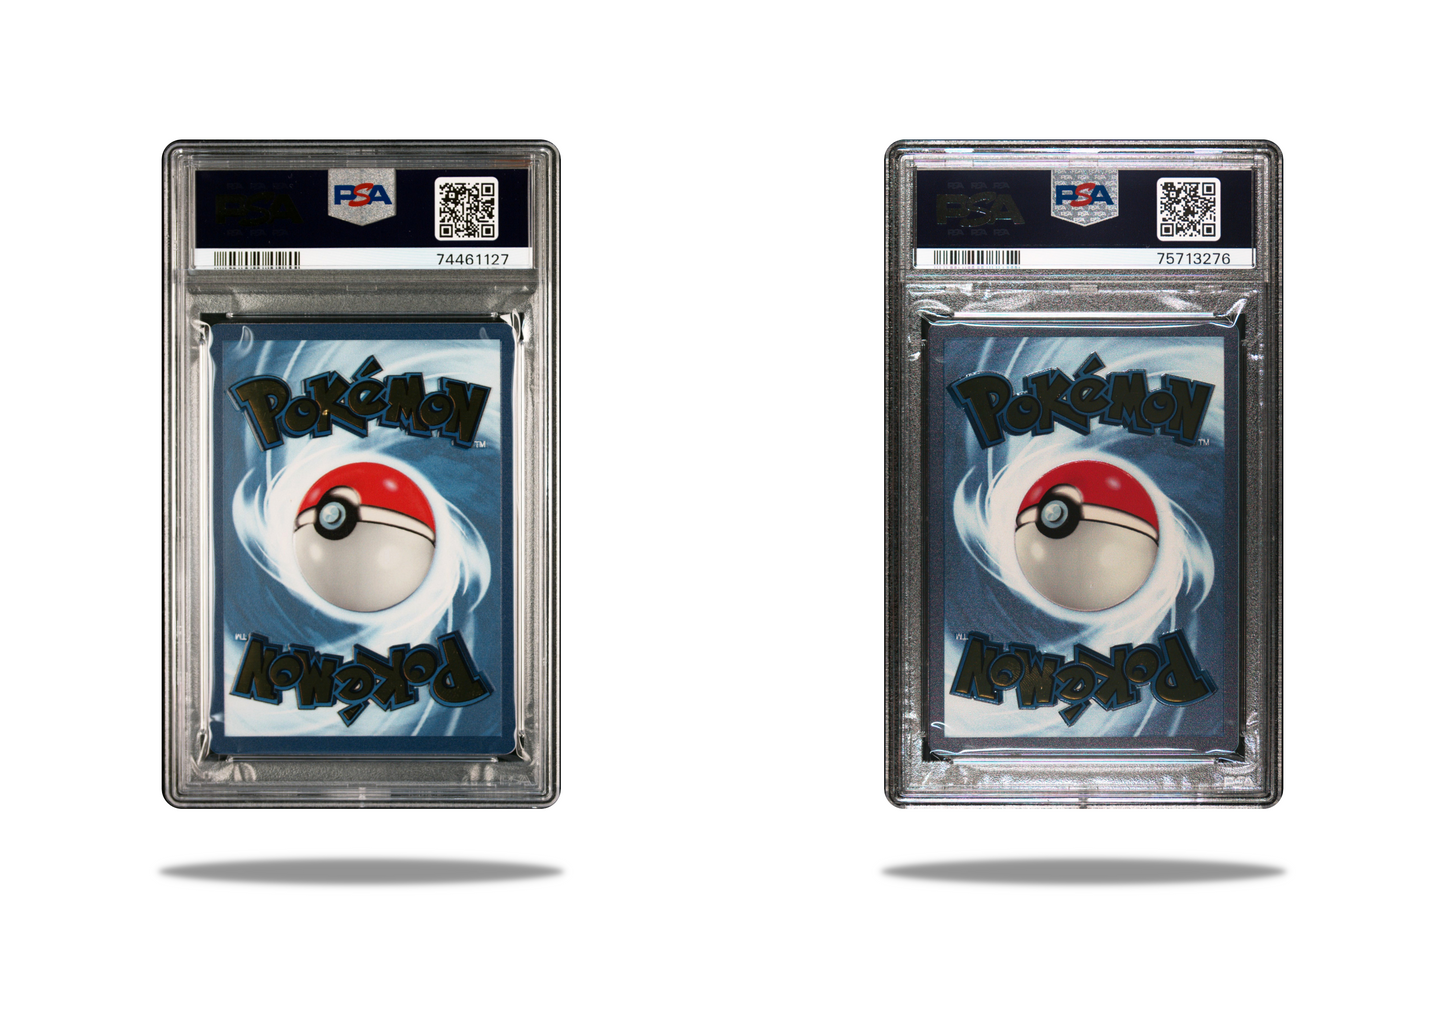 Metal Arceus PSA 10 Pokemon Collector's Card Set: V & VSTAR || #122 & #123